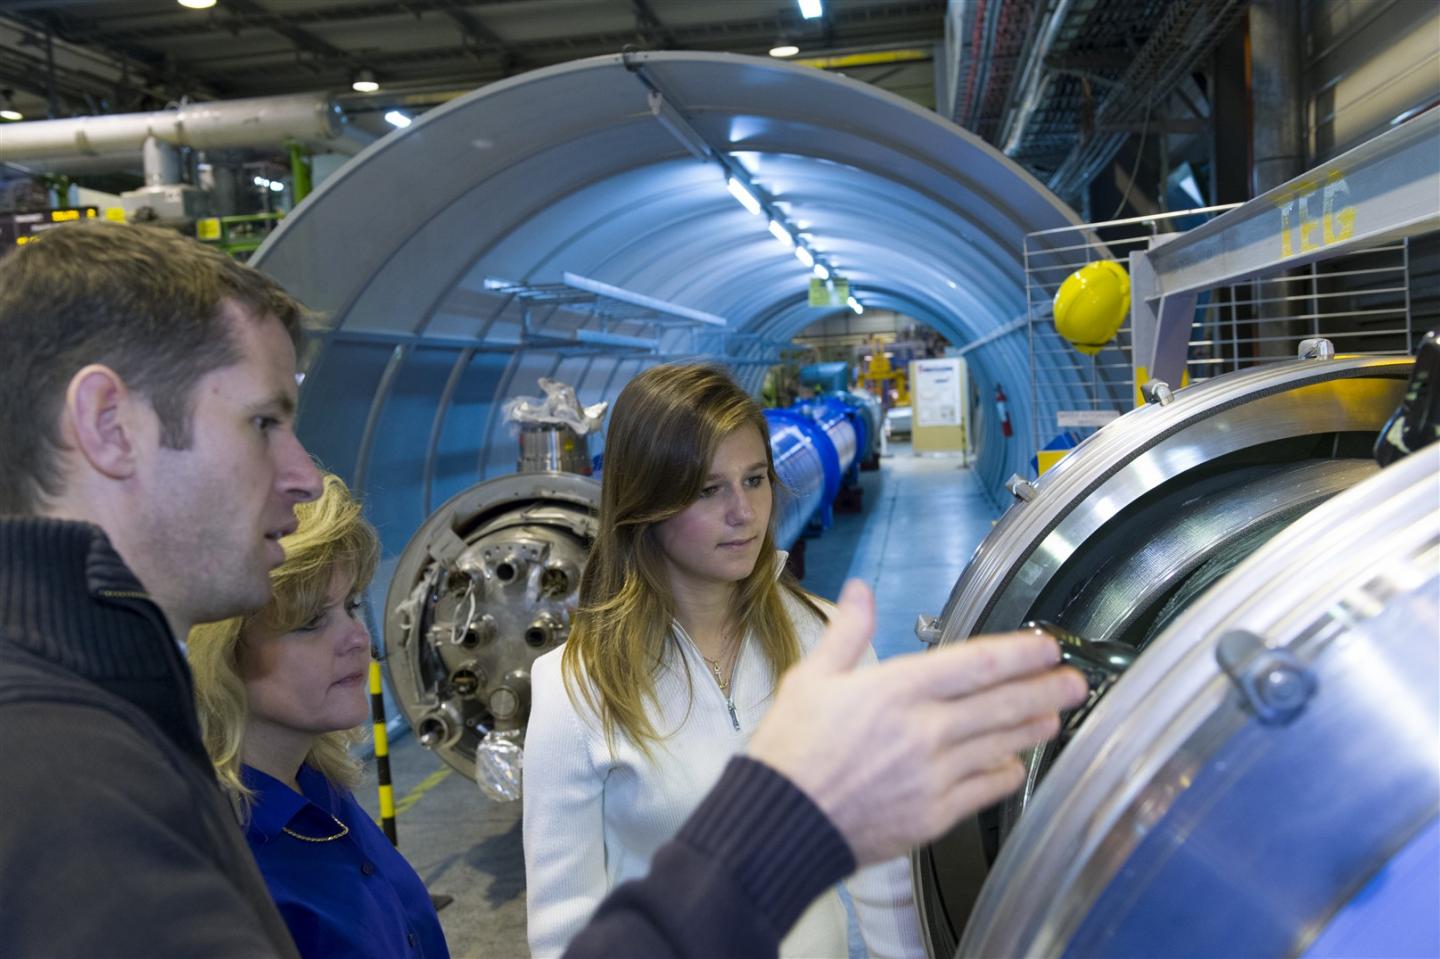 Google Science Fair winner visits CERN